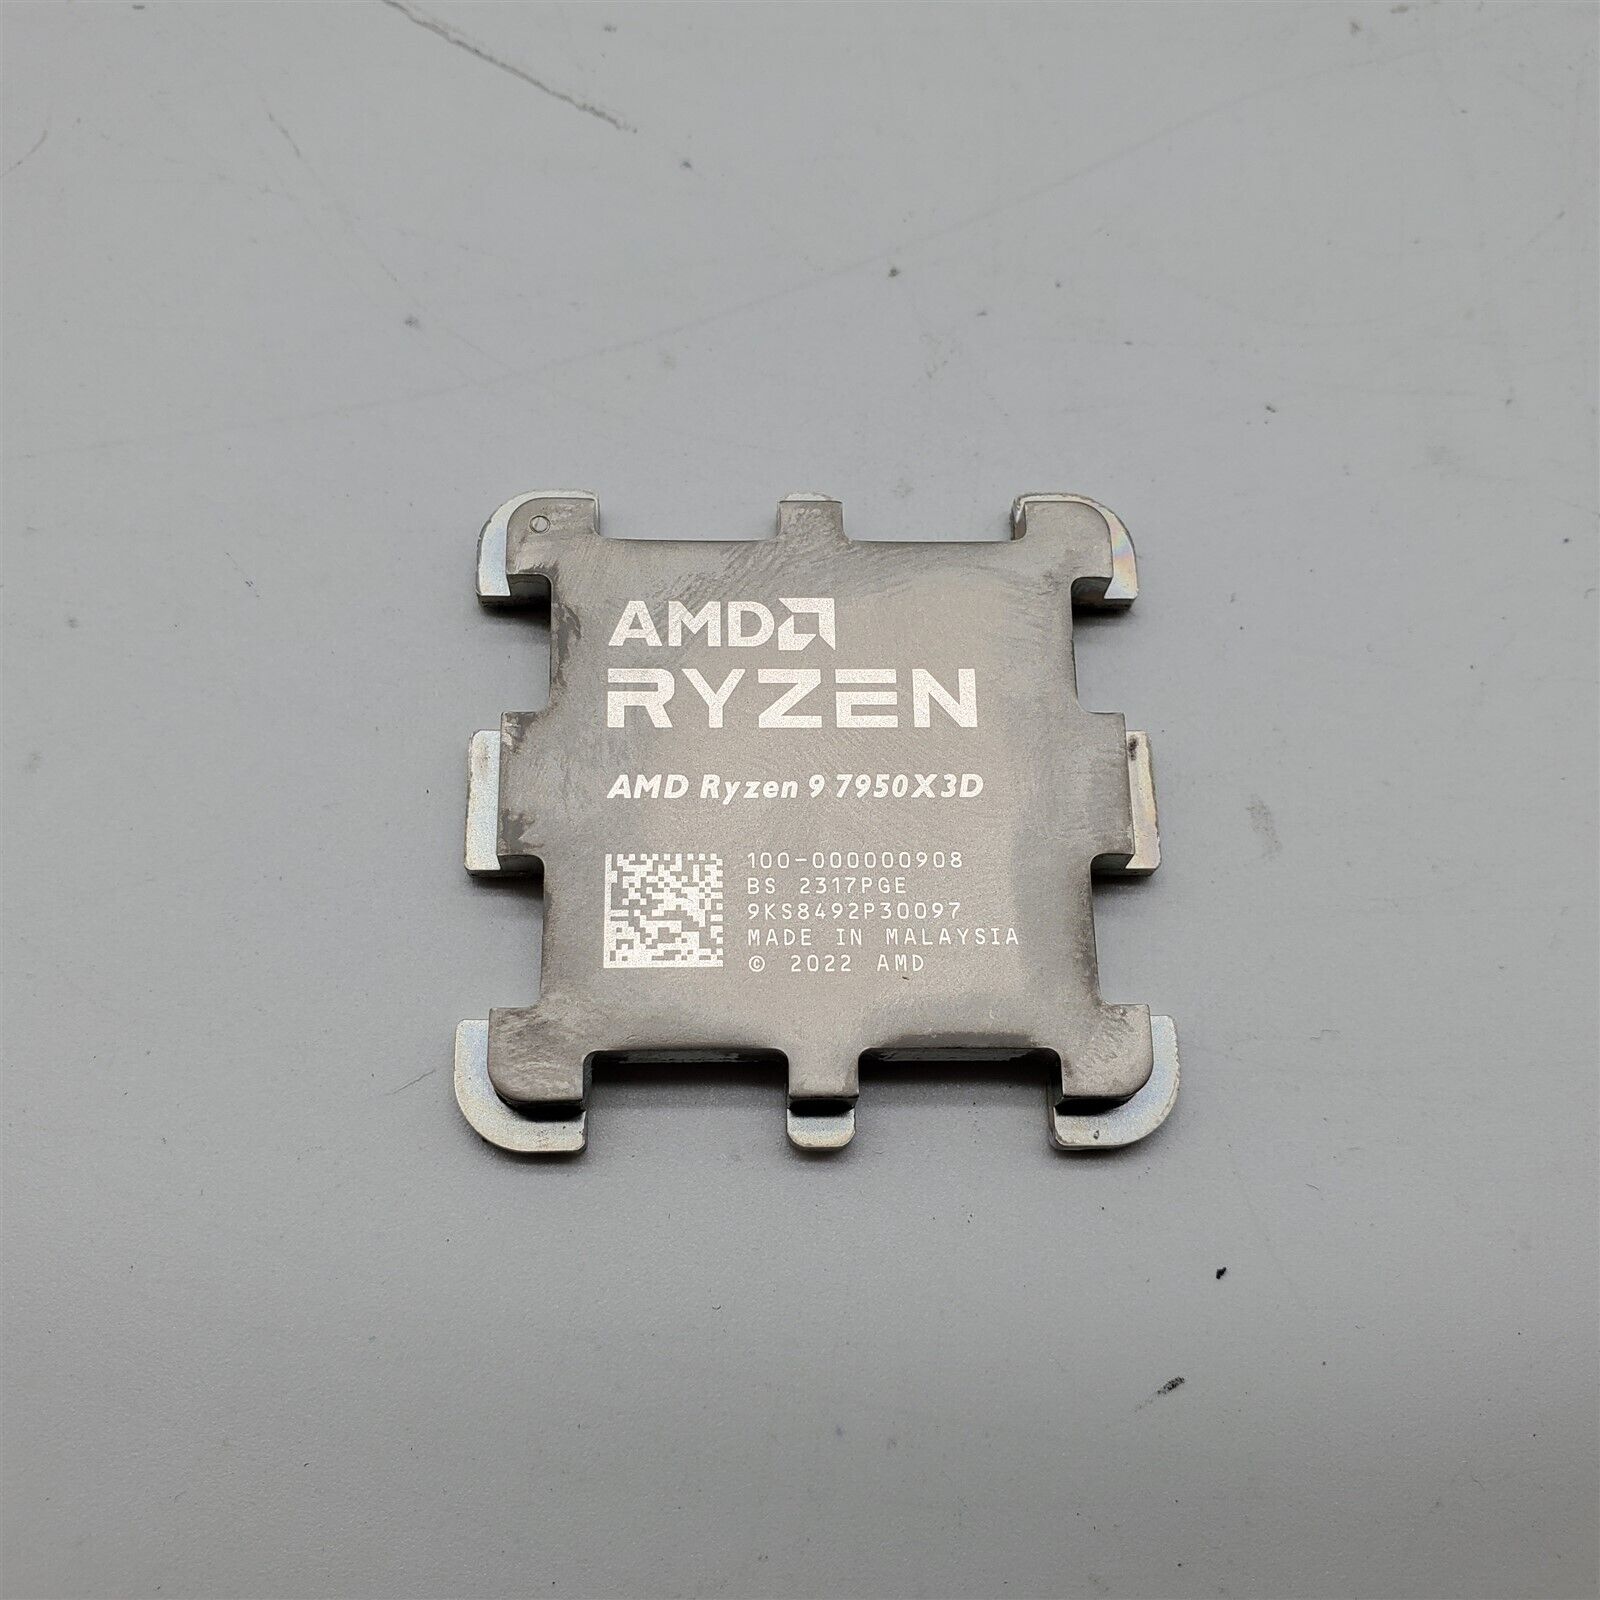 IHS for AMD Ryzen 9 7950X3D 16-Core